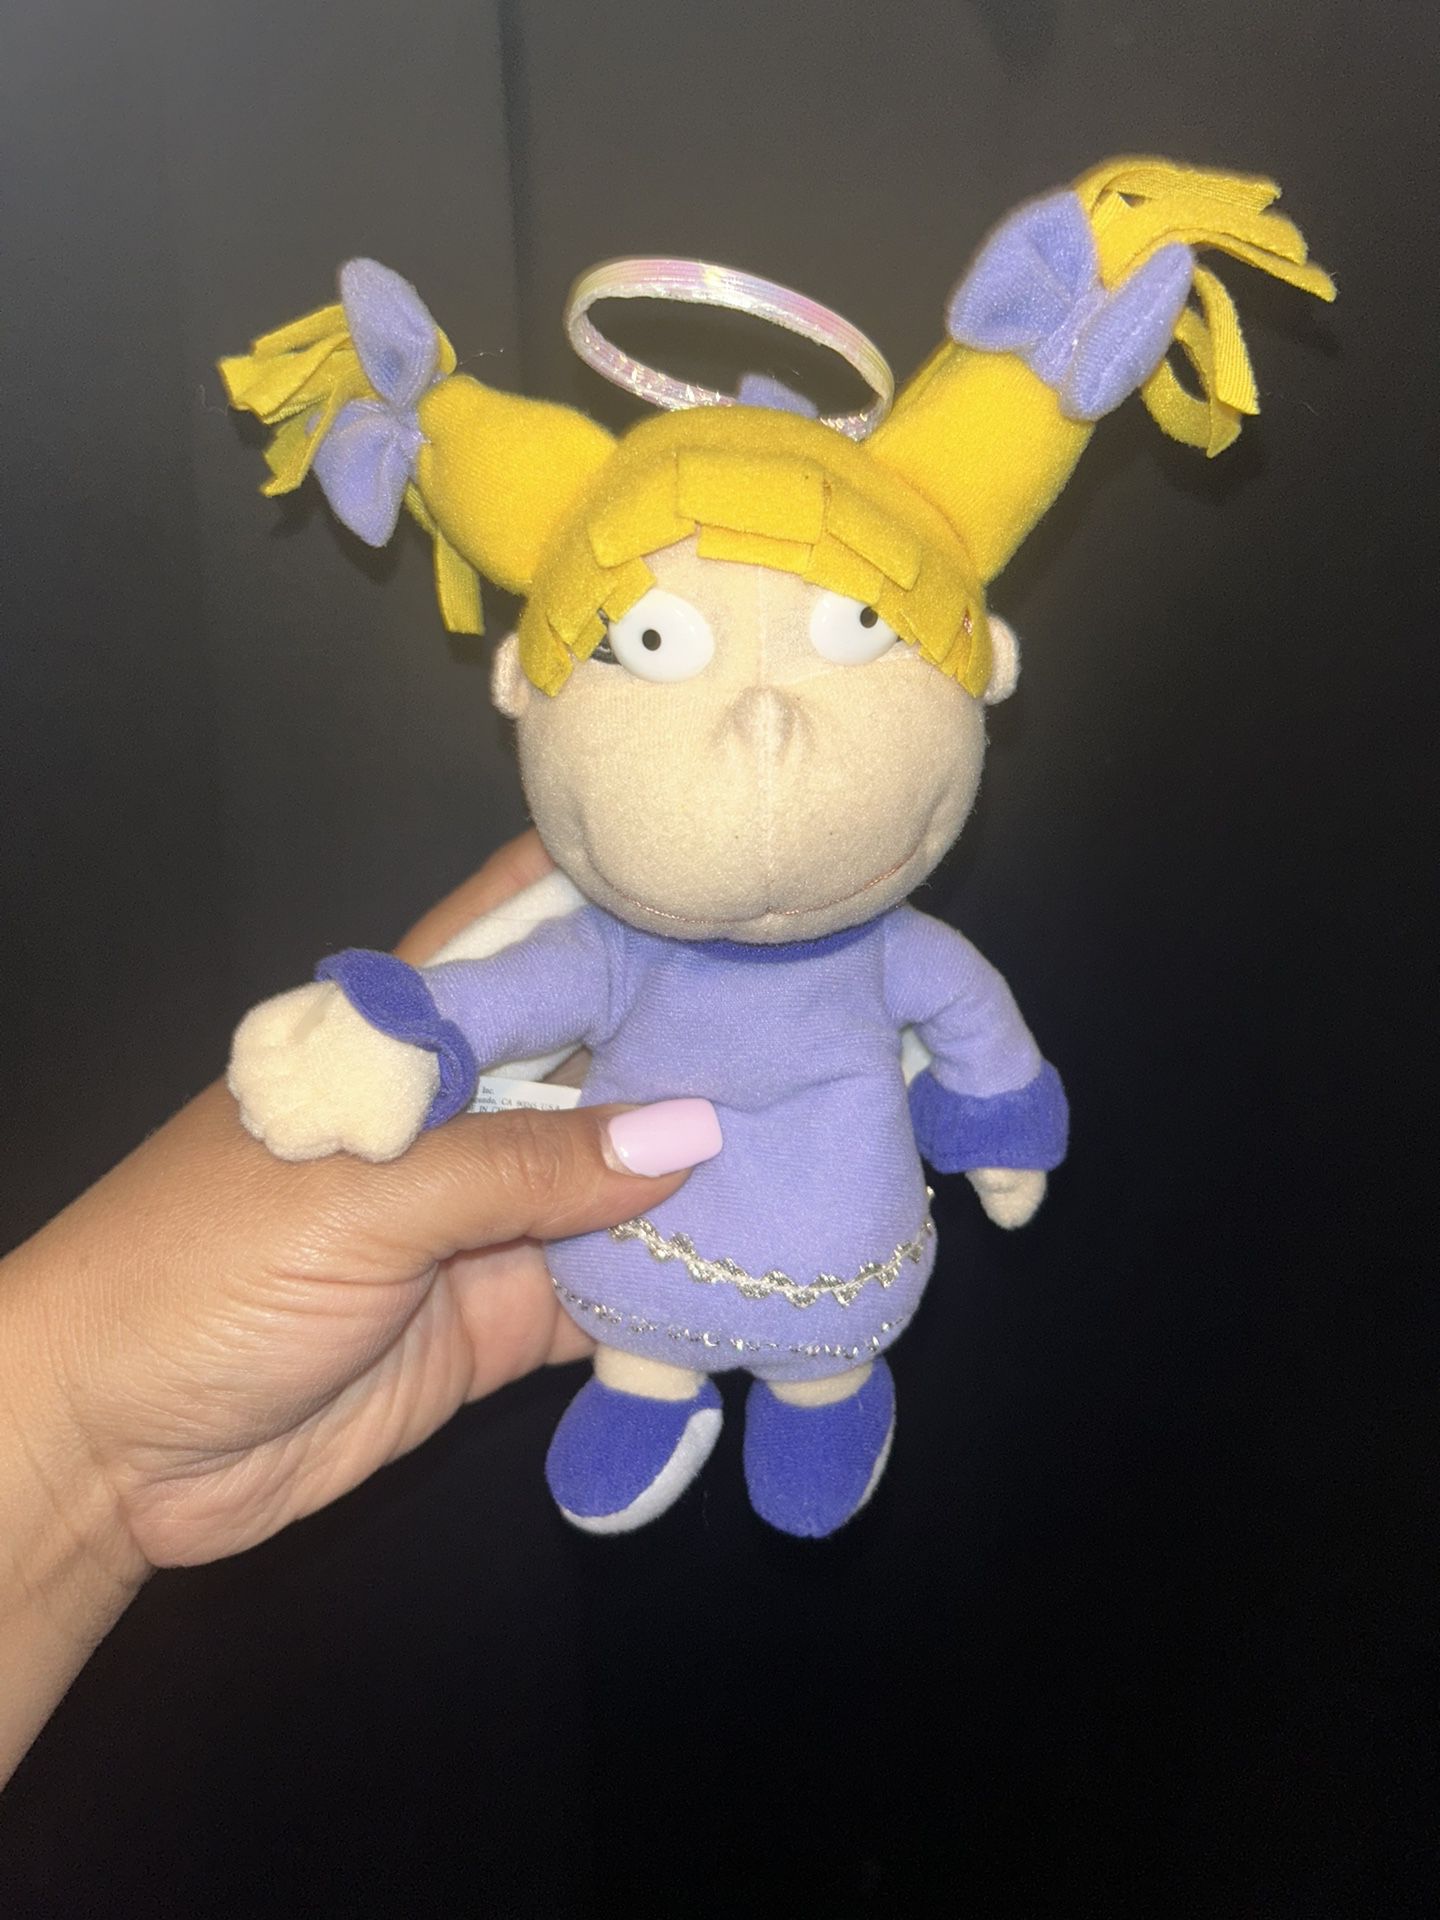 Official 1997 Rugrats Bean Bag Plush Angelica “Angel” Rare Nickelodeon VTG